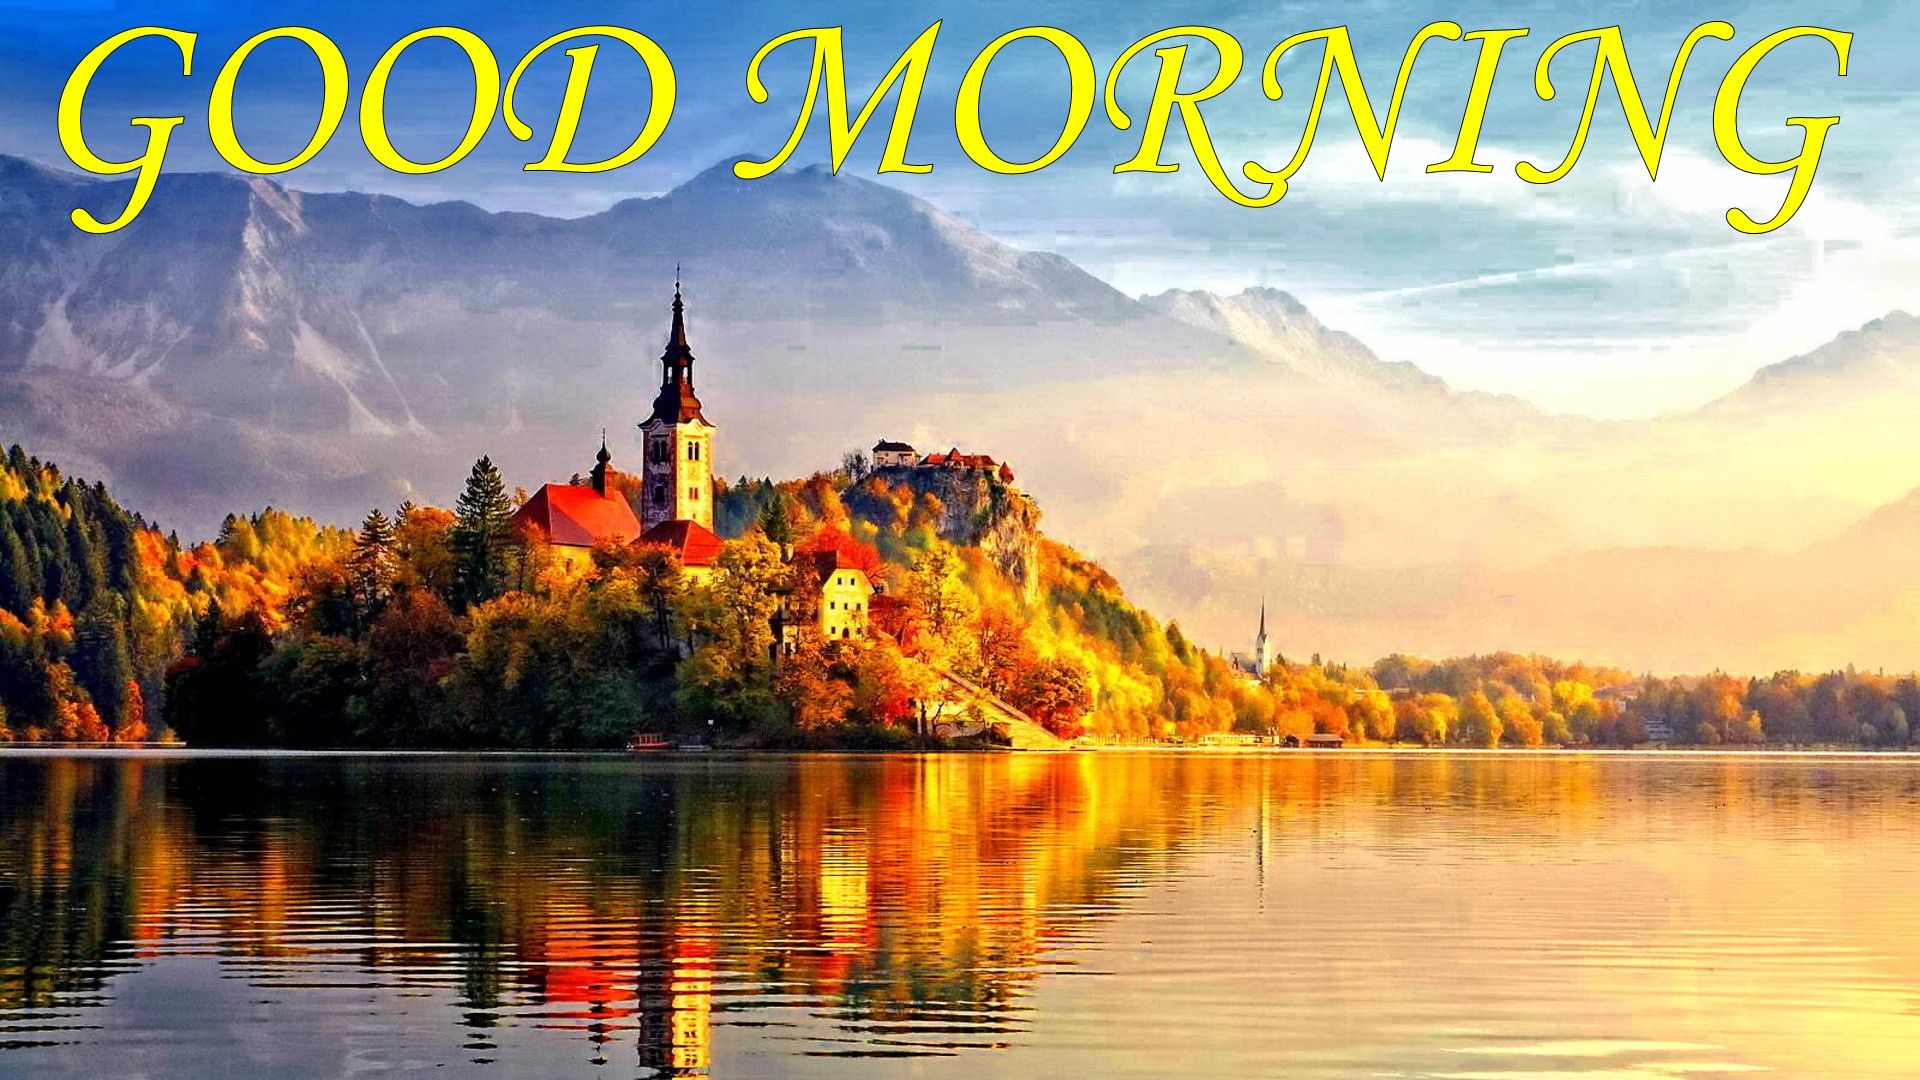 Good Morning Beautiful Scenery Hd Wallpapers - Good Morning Image With Beautiful Scenery - HD Wallpaper 